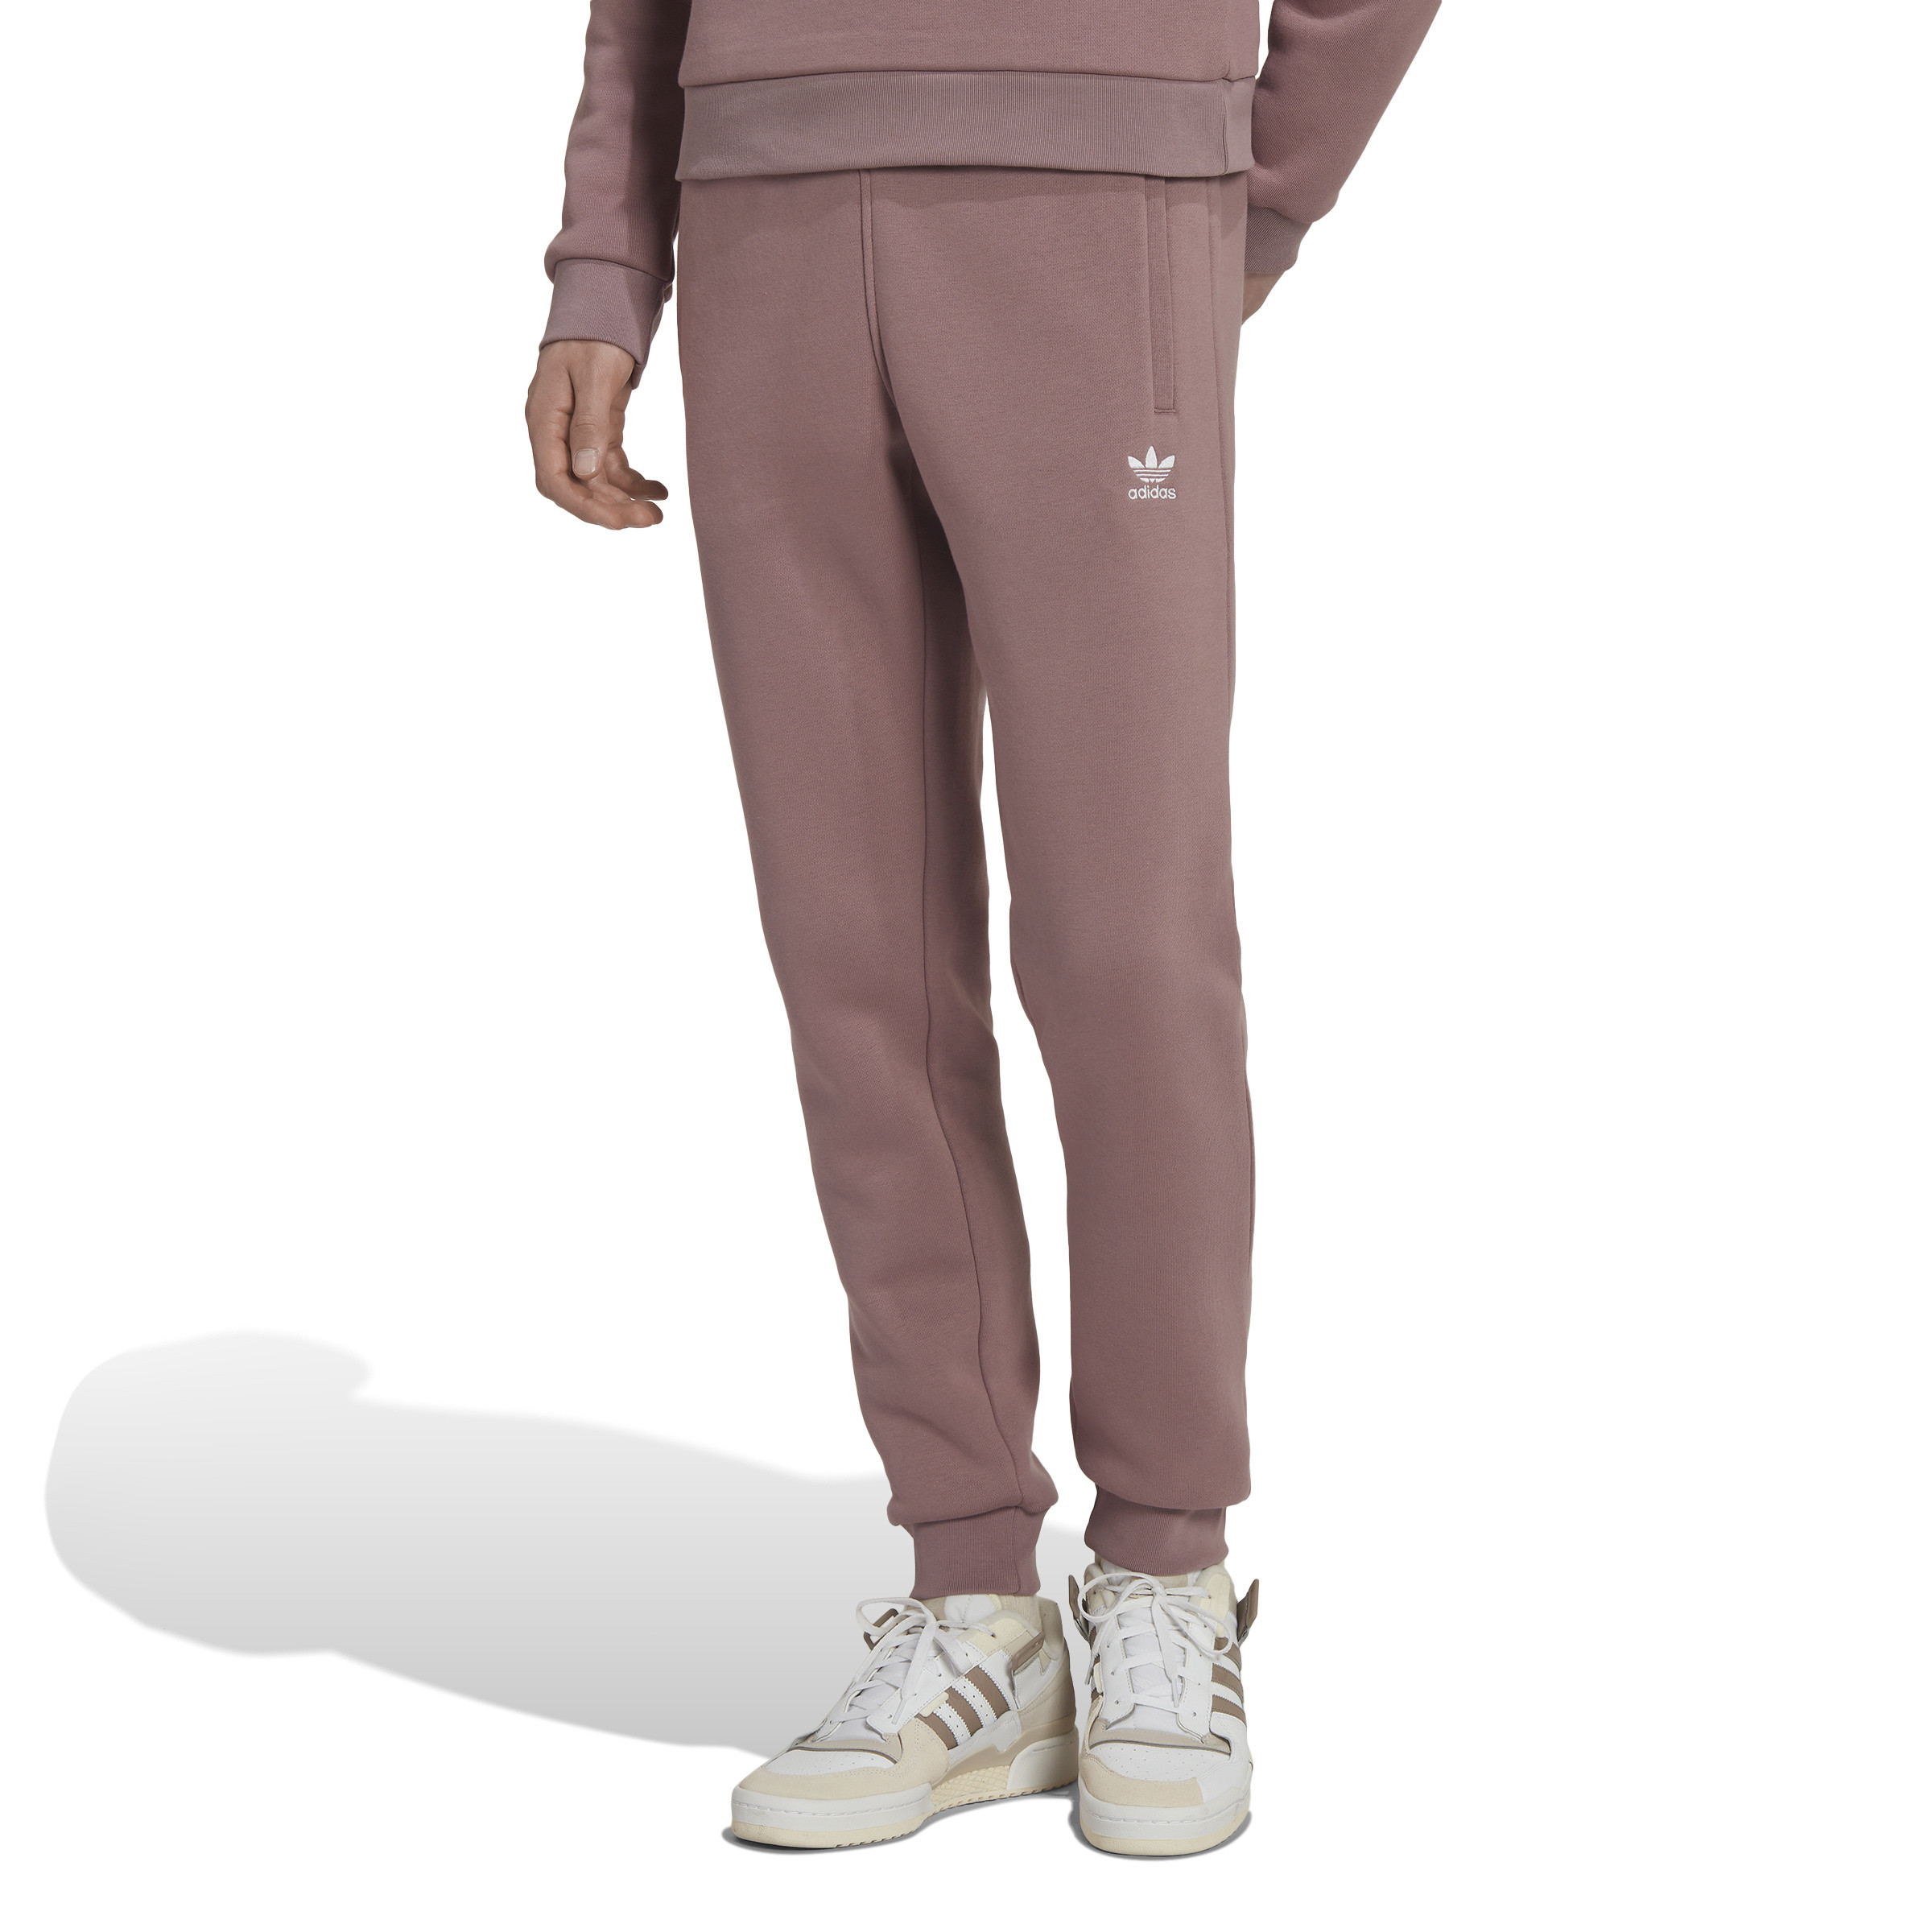 Adidas - Adicolor Essentials Trefoil Pants, Antique Pink, large image number 1